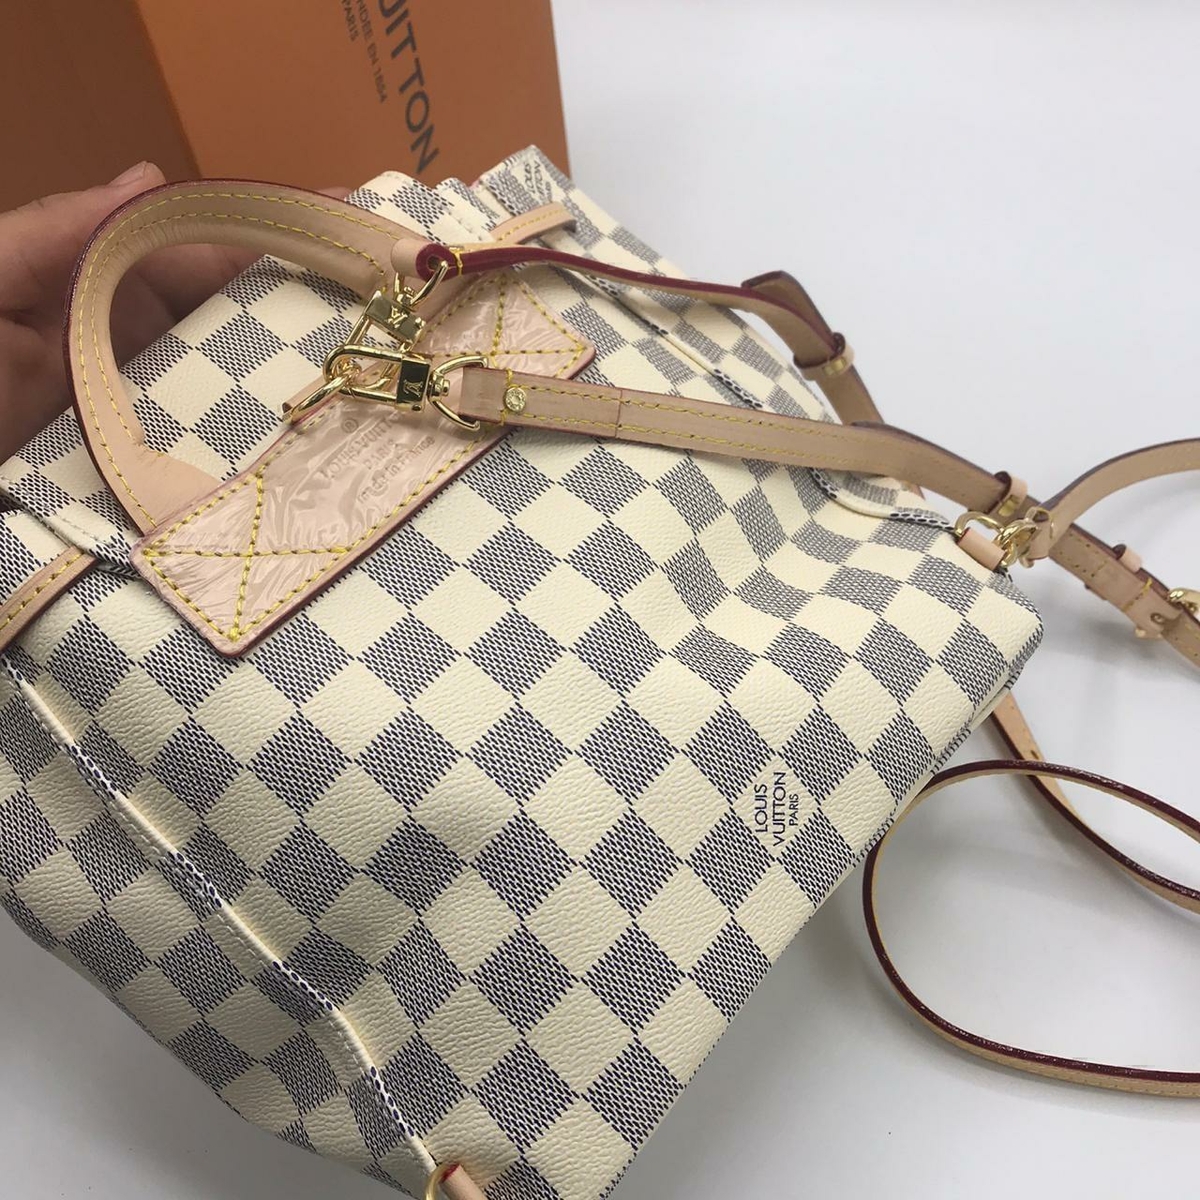 Louis Vuitton рюкзак #1 в «Globestyle» арт.5379OO